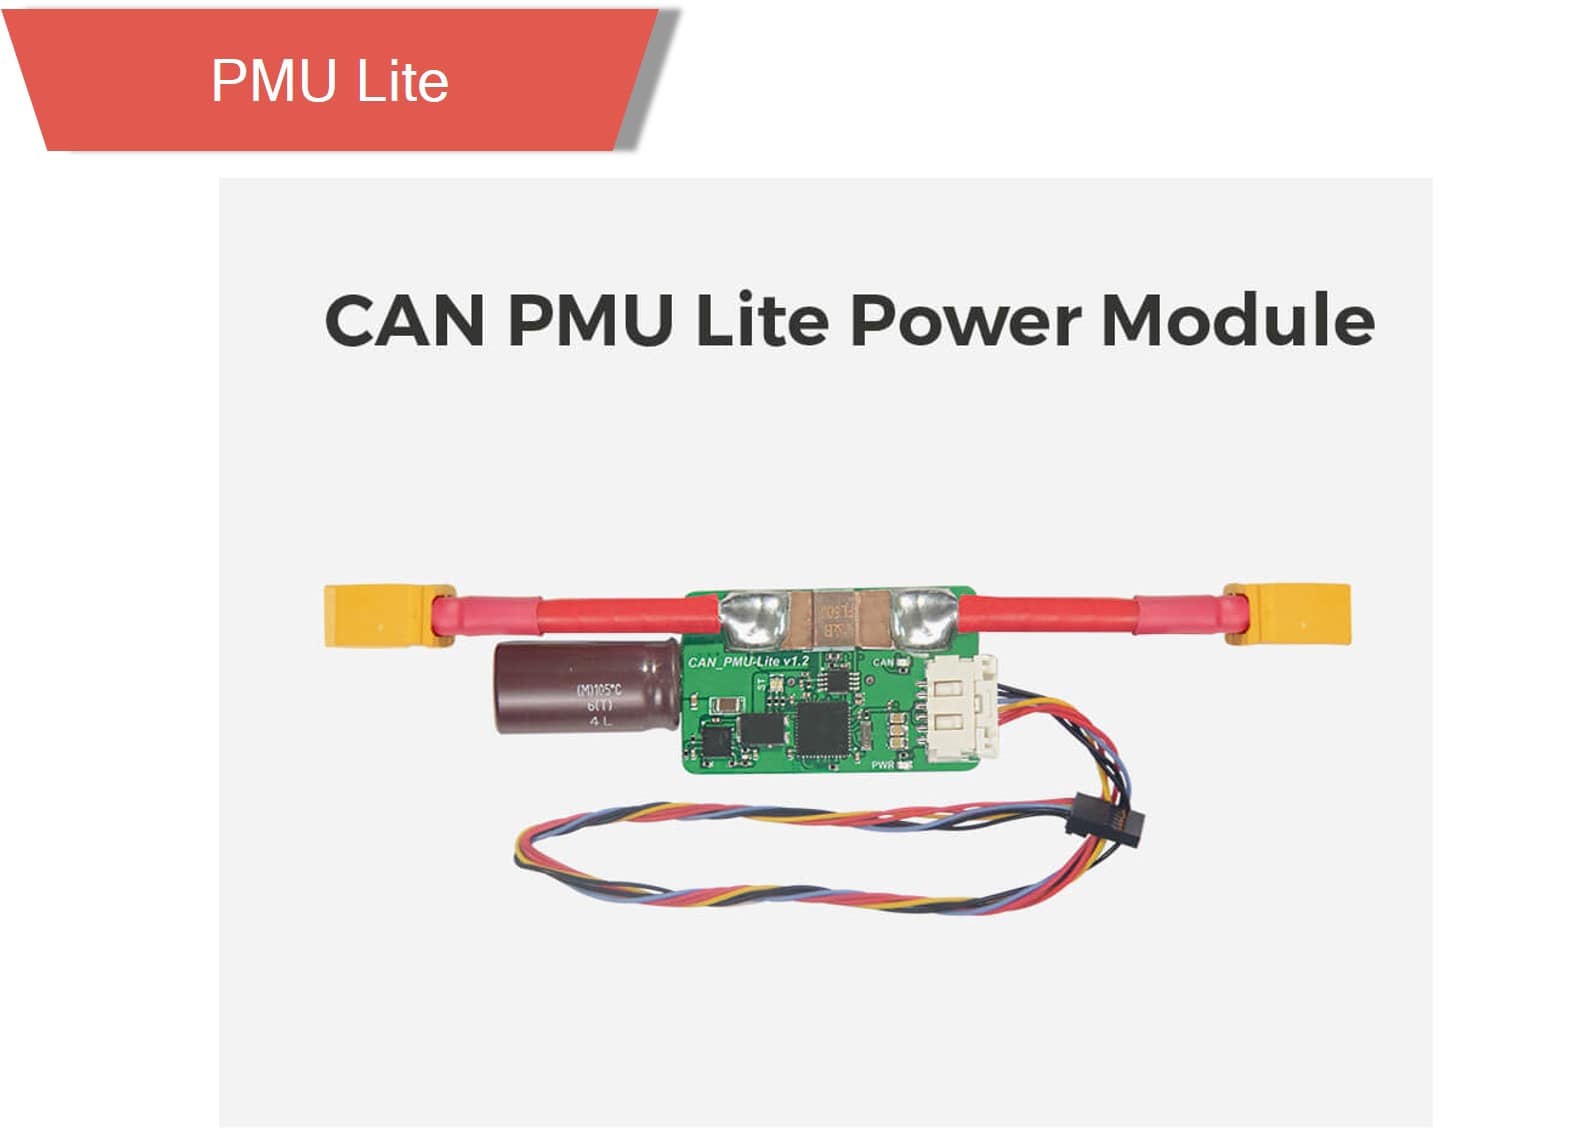 Pmu lite 1 - cuav can pmu,drone power module,power module,pixhawk power module,pixhawk voltage sensor,pixhawk current sensor,drone regulator,drone power supply,pixhawk voltage - motionew - 5